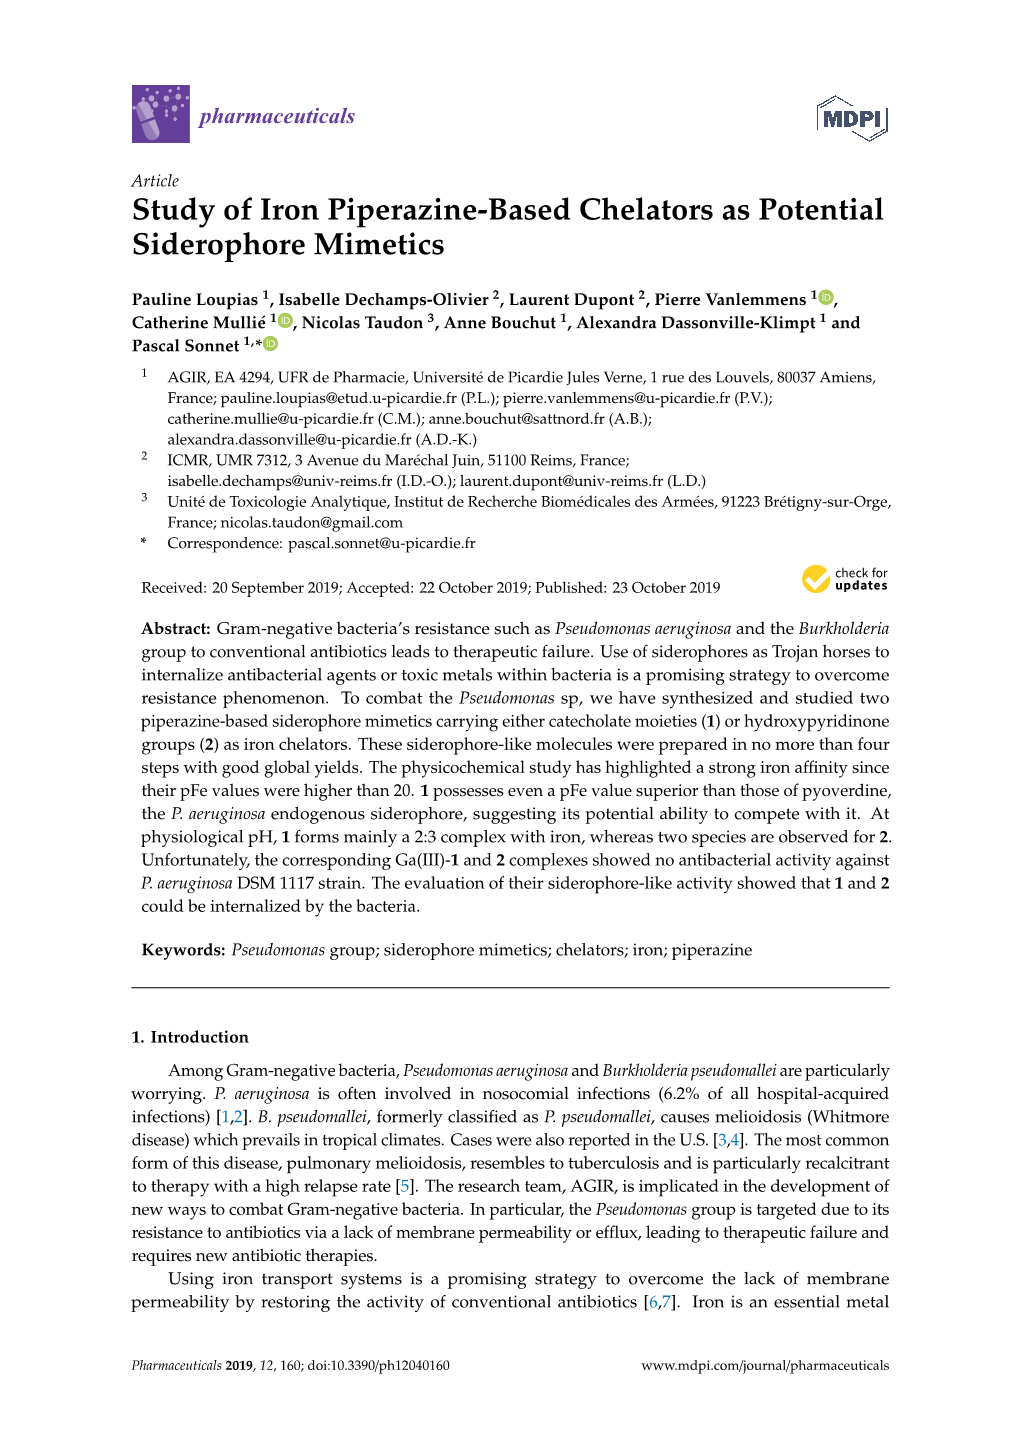 Study of Iron Piperazine-Based Chelators As Potential Siderophore Mimetics